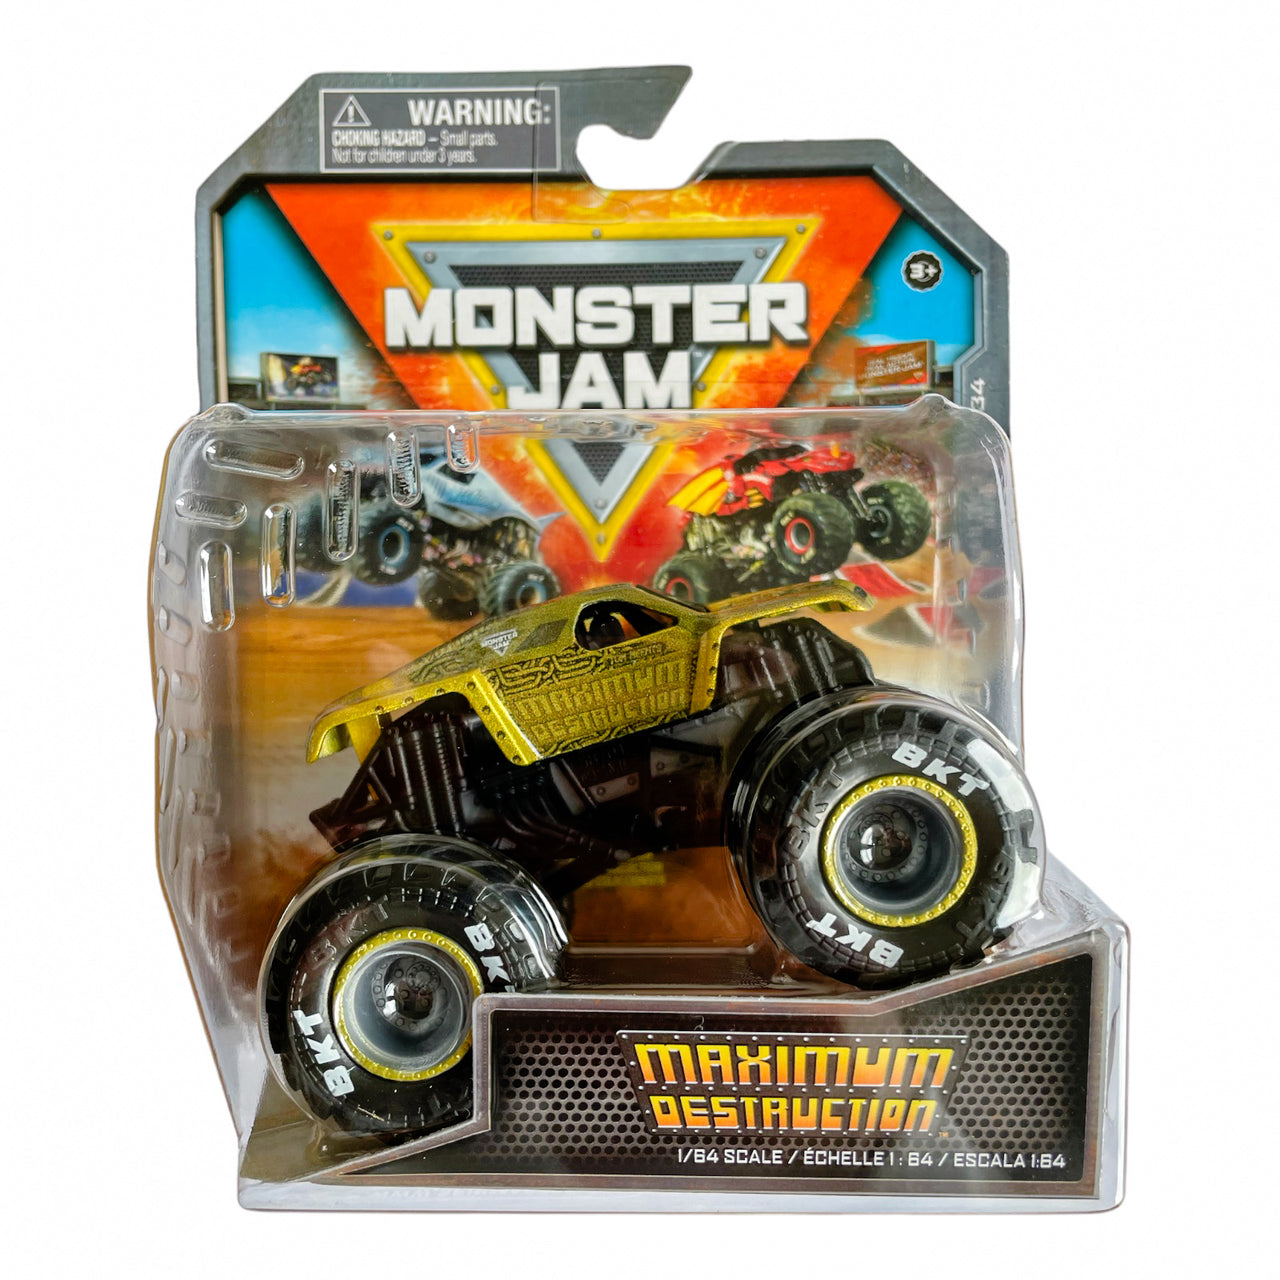 Monster Jam Die-Cast Vehicle 1:64 Scale Maximum Destruction Monster Jam